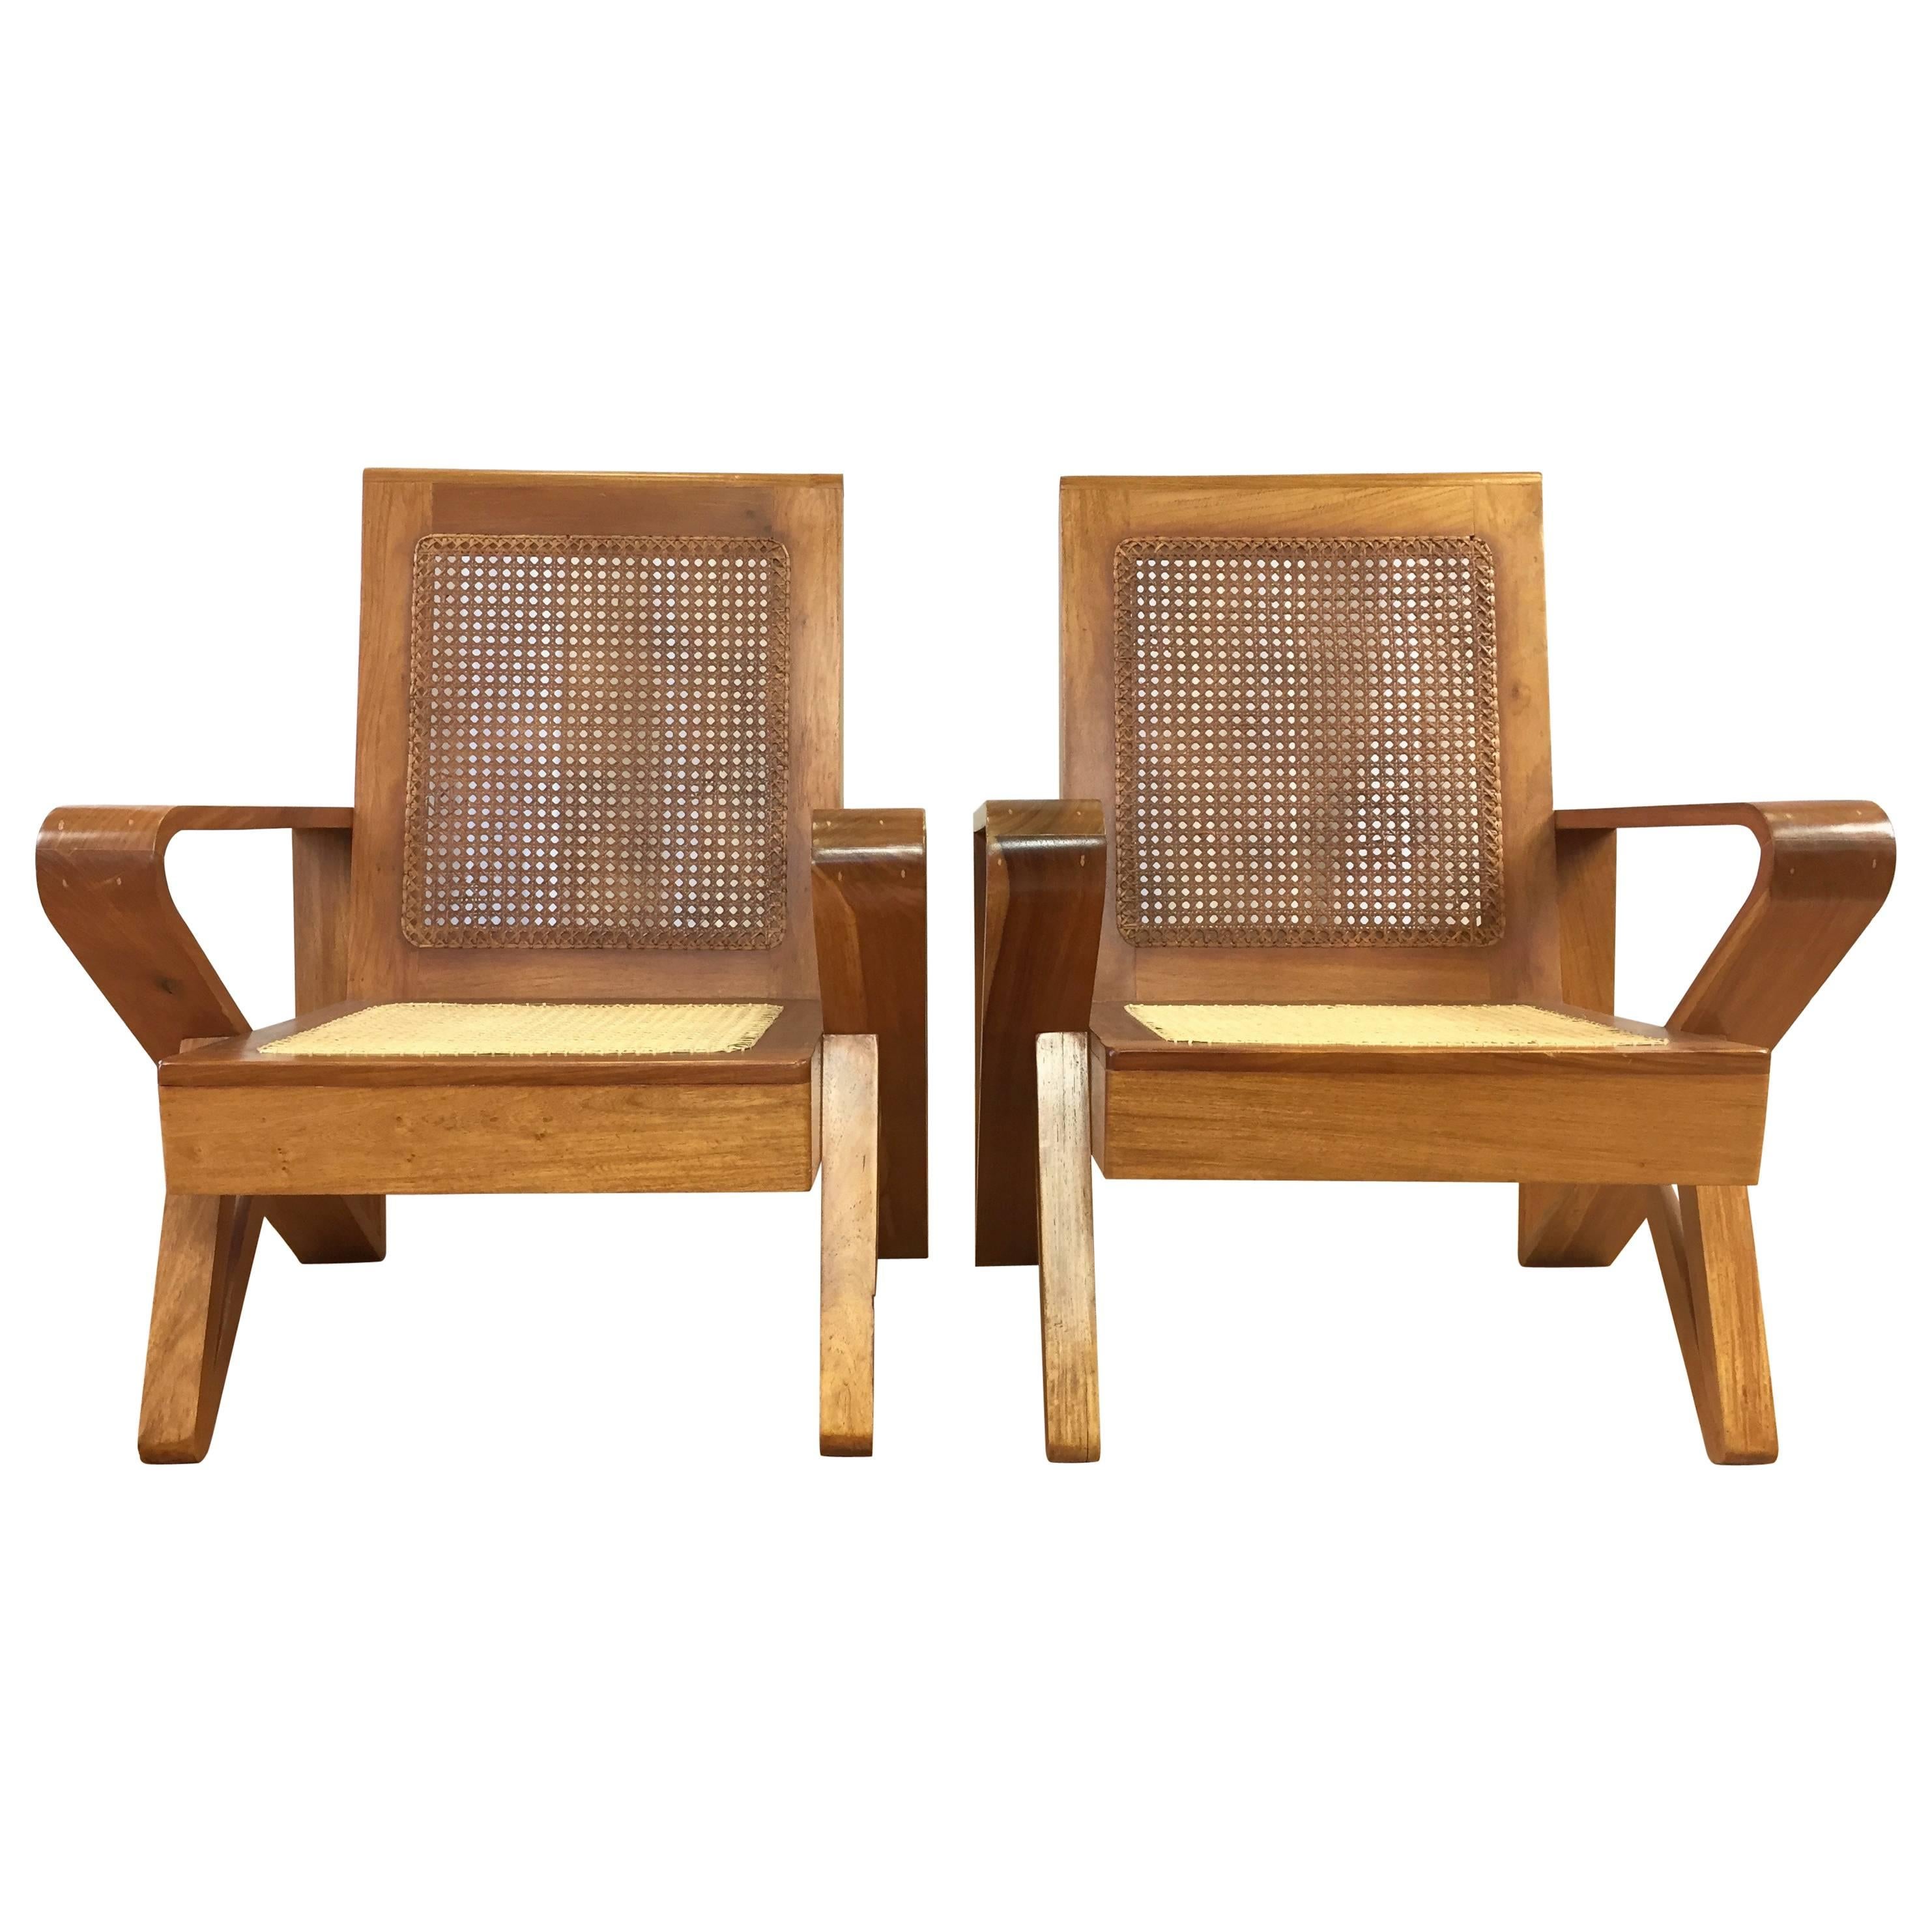 Uncommon Pair of Hawaiian Koa Wood and Woven Cane Lounge Chairs